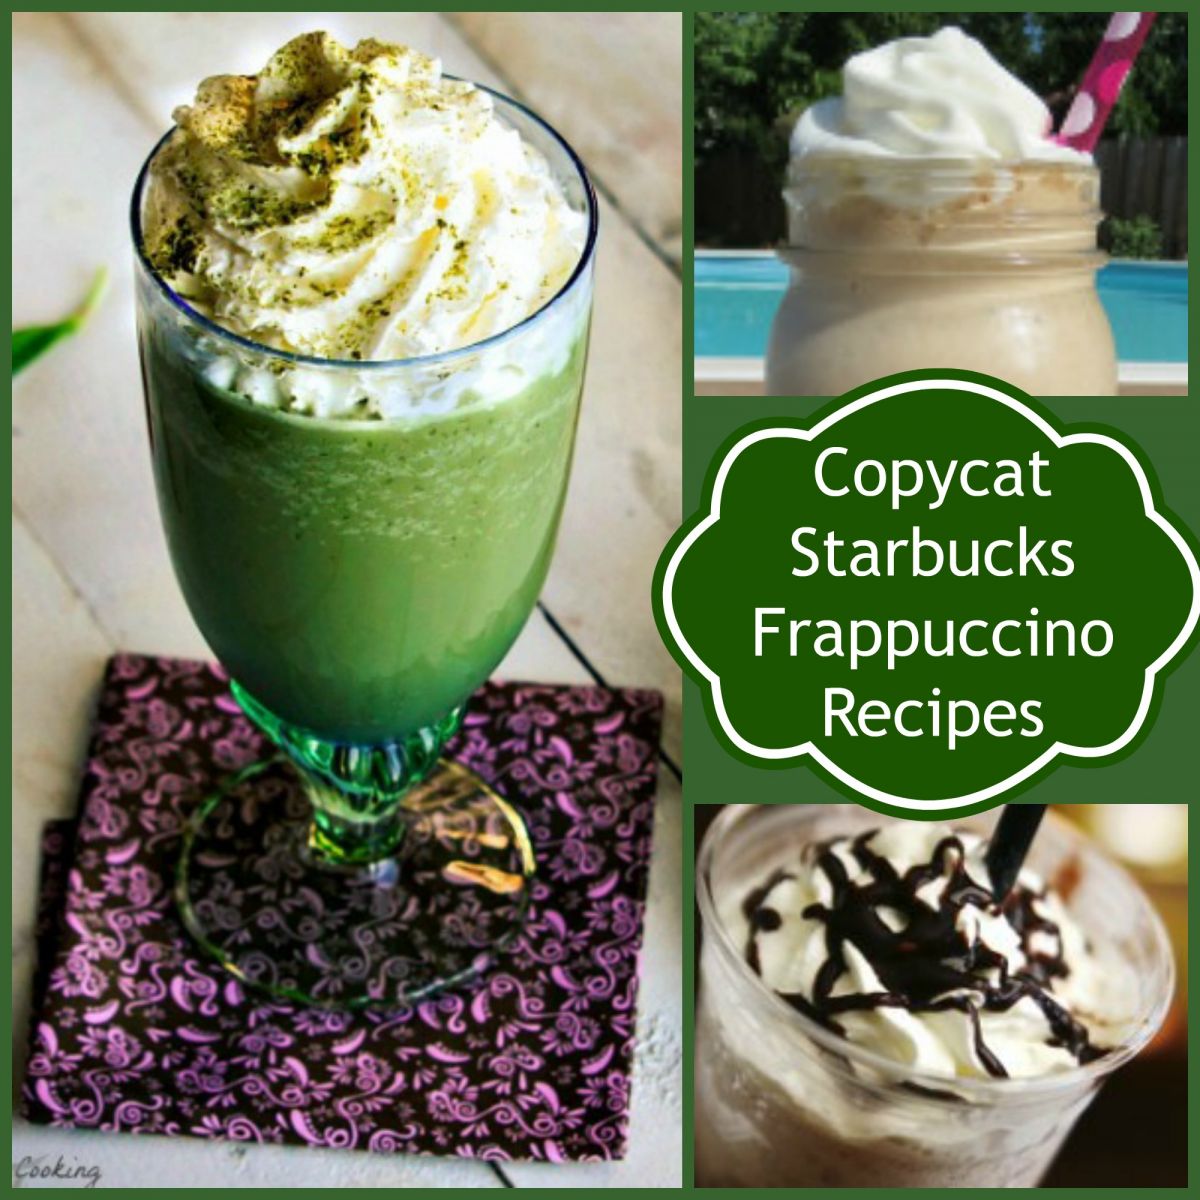 Copycat Starbucks Recipes